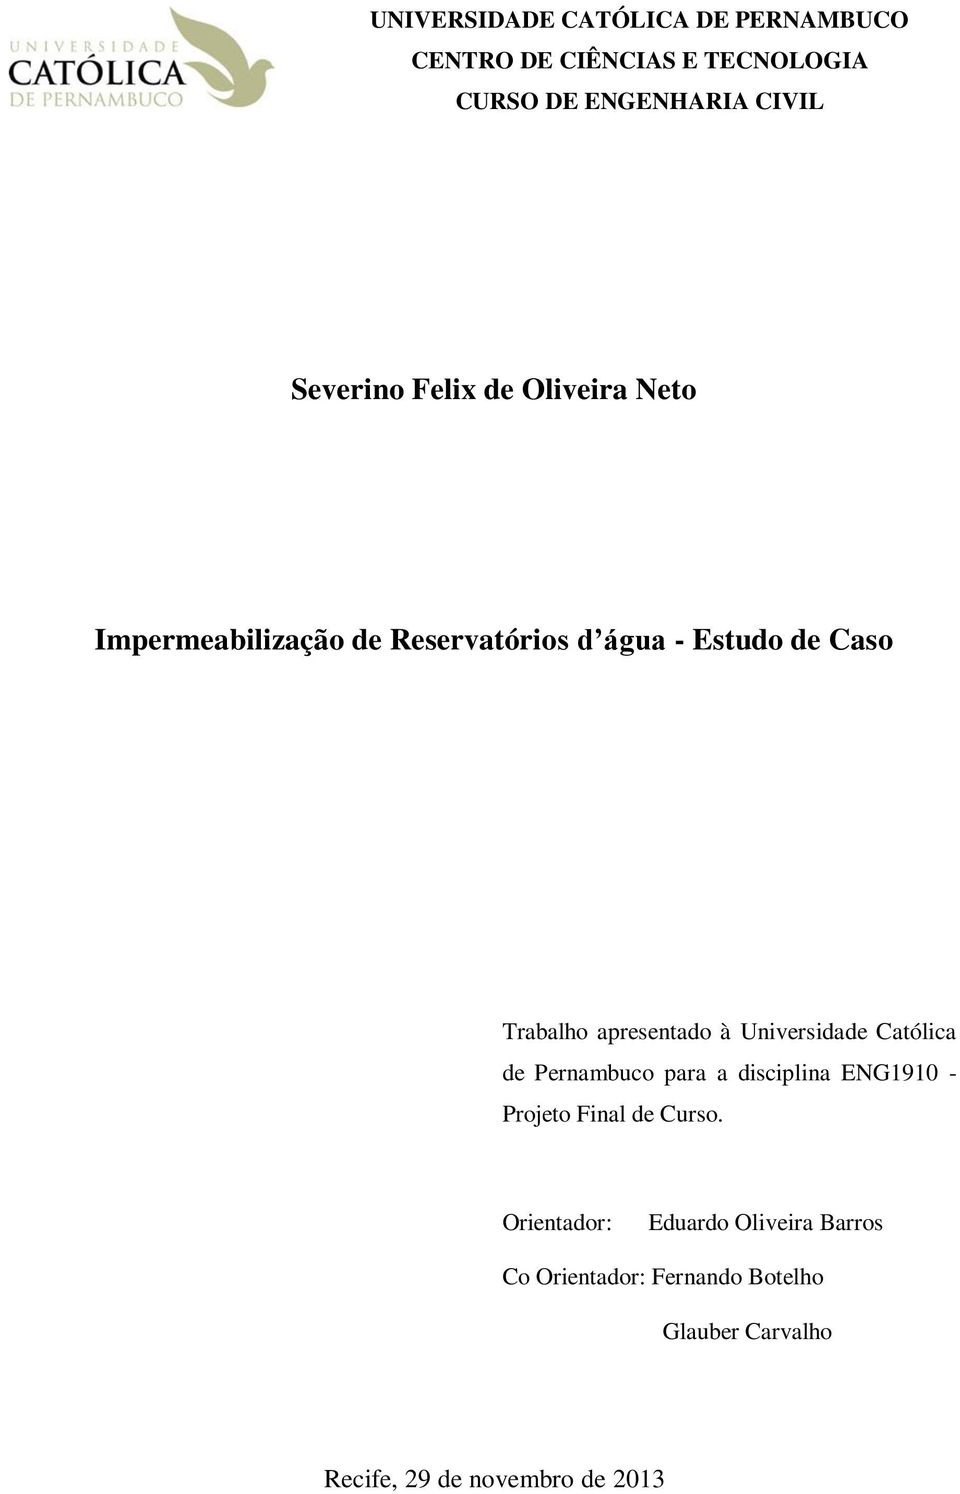 à Universidade Católica de Pernambuco para a disciplina ENG1910 - Projeto Final de Curso.